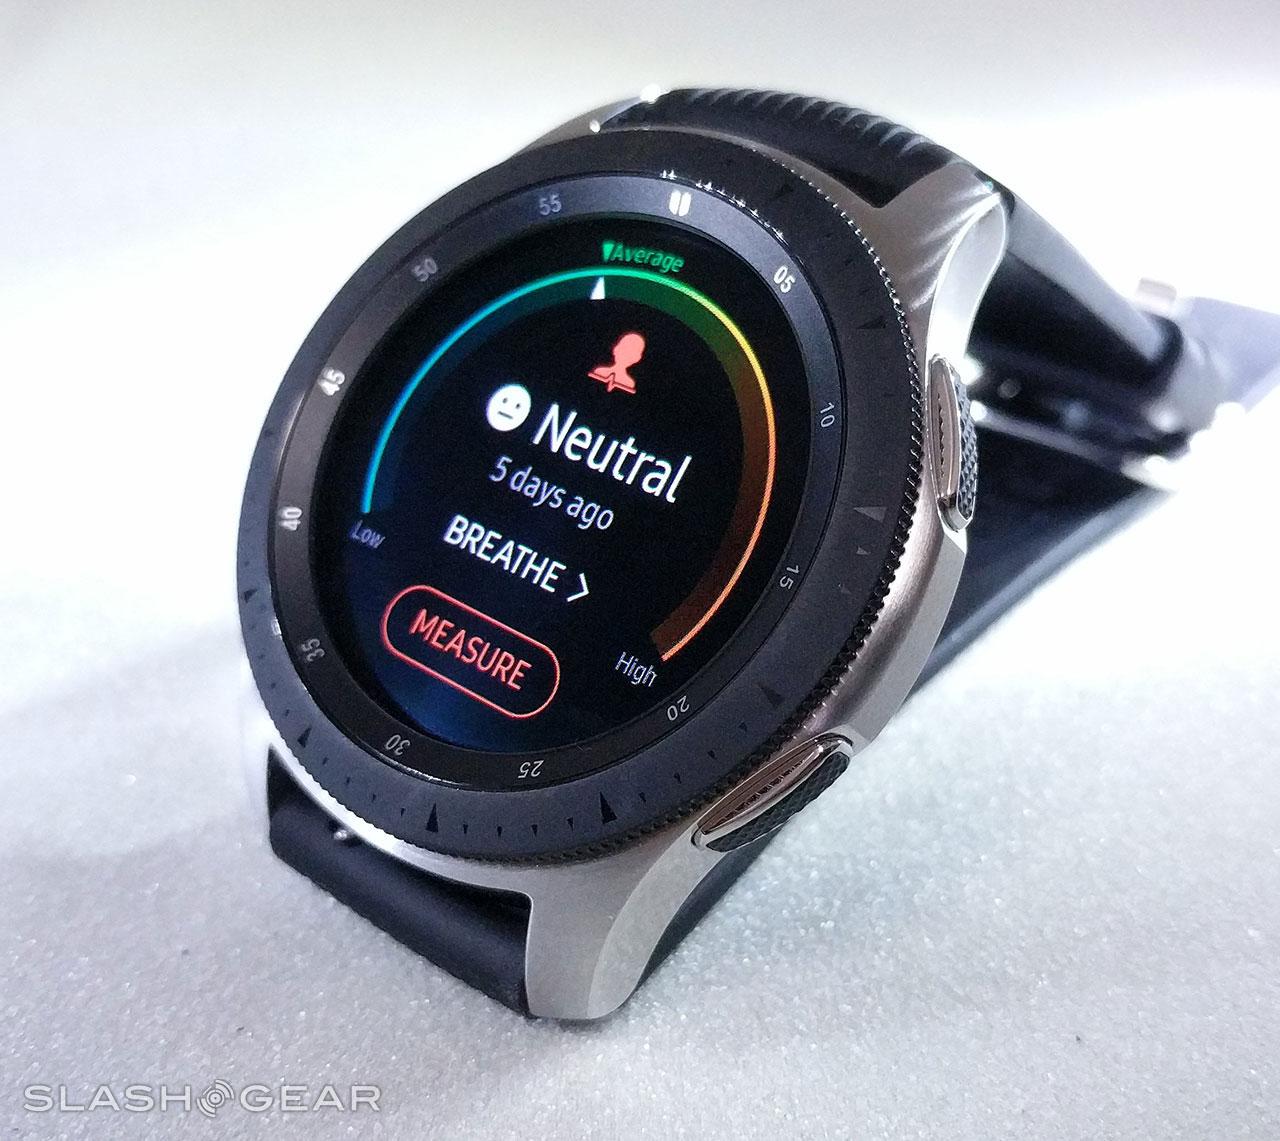 Samsung watch r800. Samsung Galaxy watch SMARTWATCH 46mm. Samsung watch SM-r800. Samsung Galaxy watch r800. Galaxy watch SM-r800.